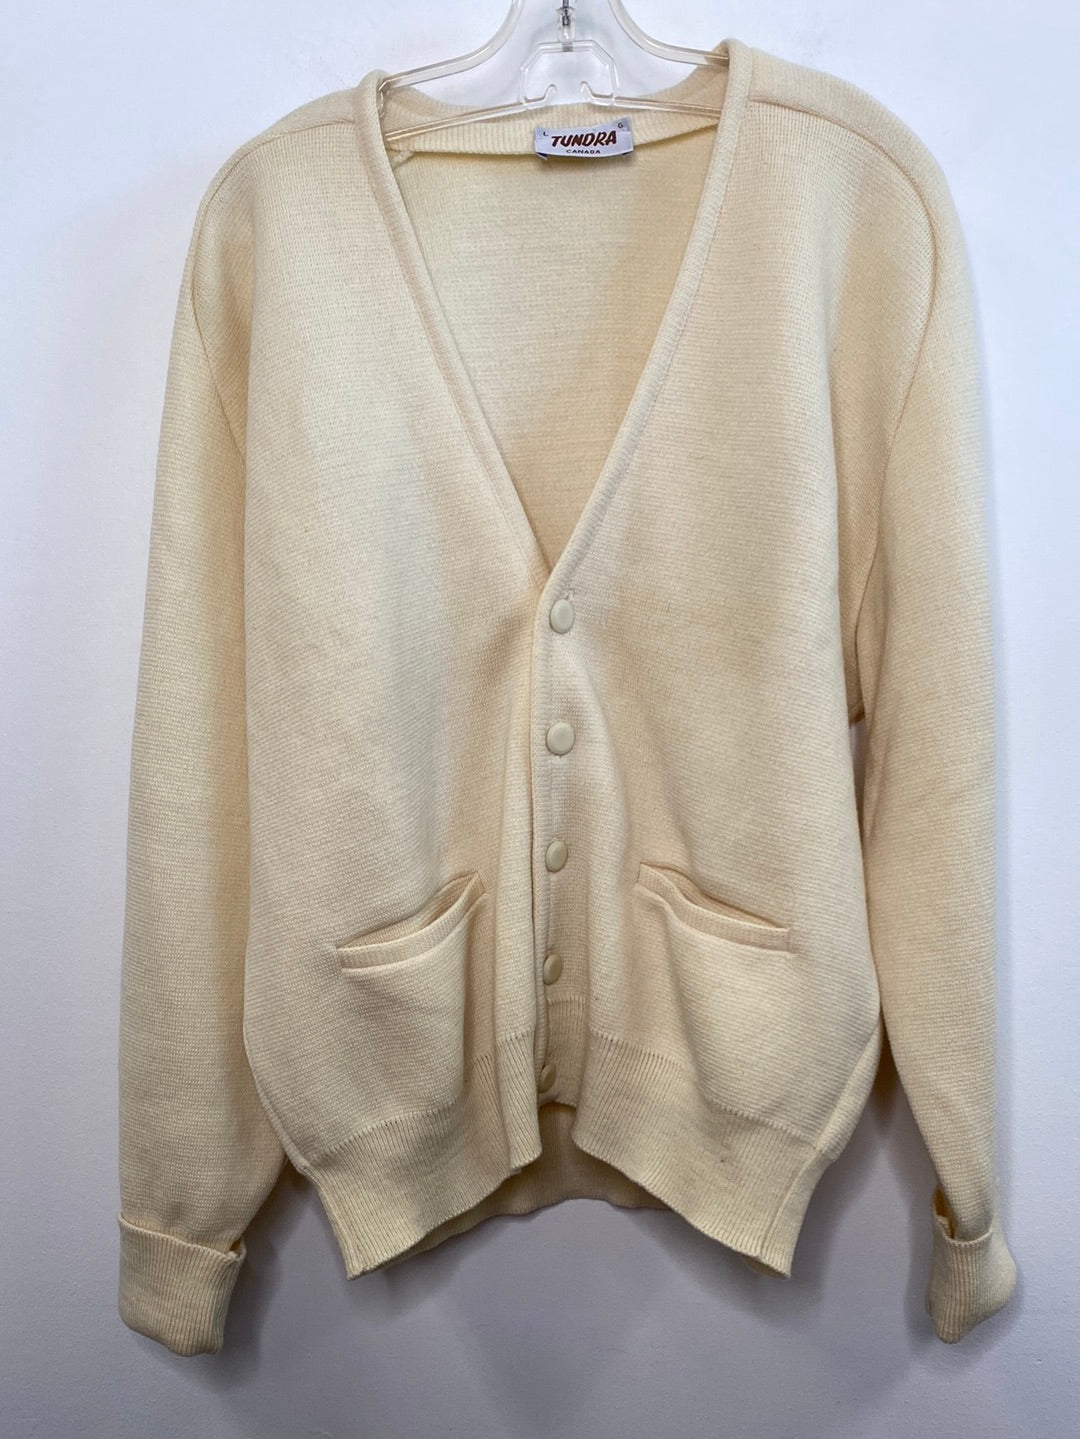 Vintage Tundra Cardigan Sweater (L)